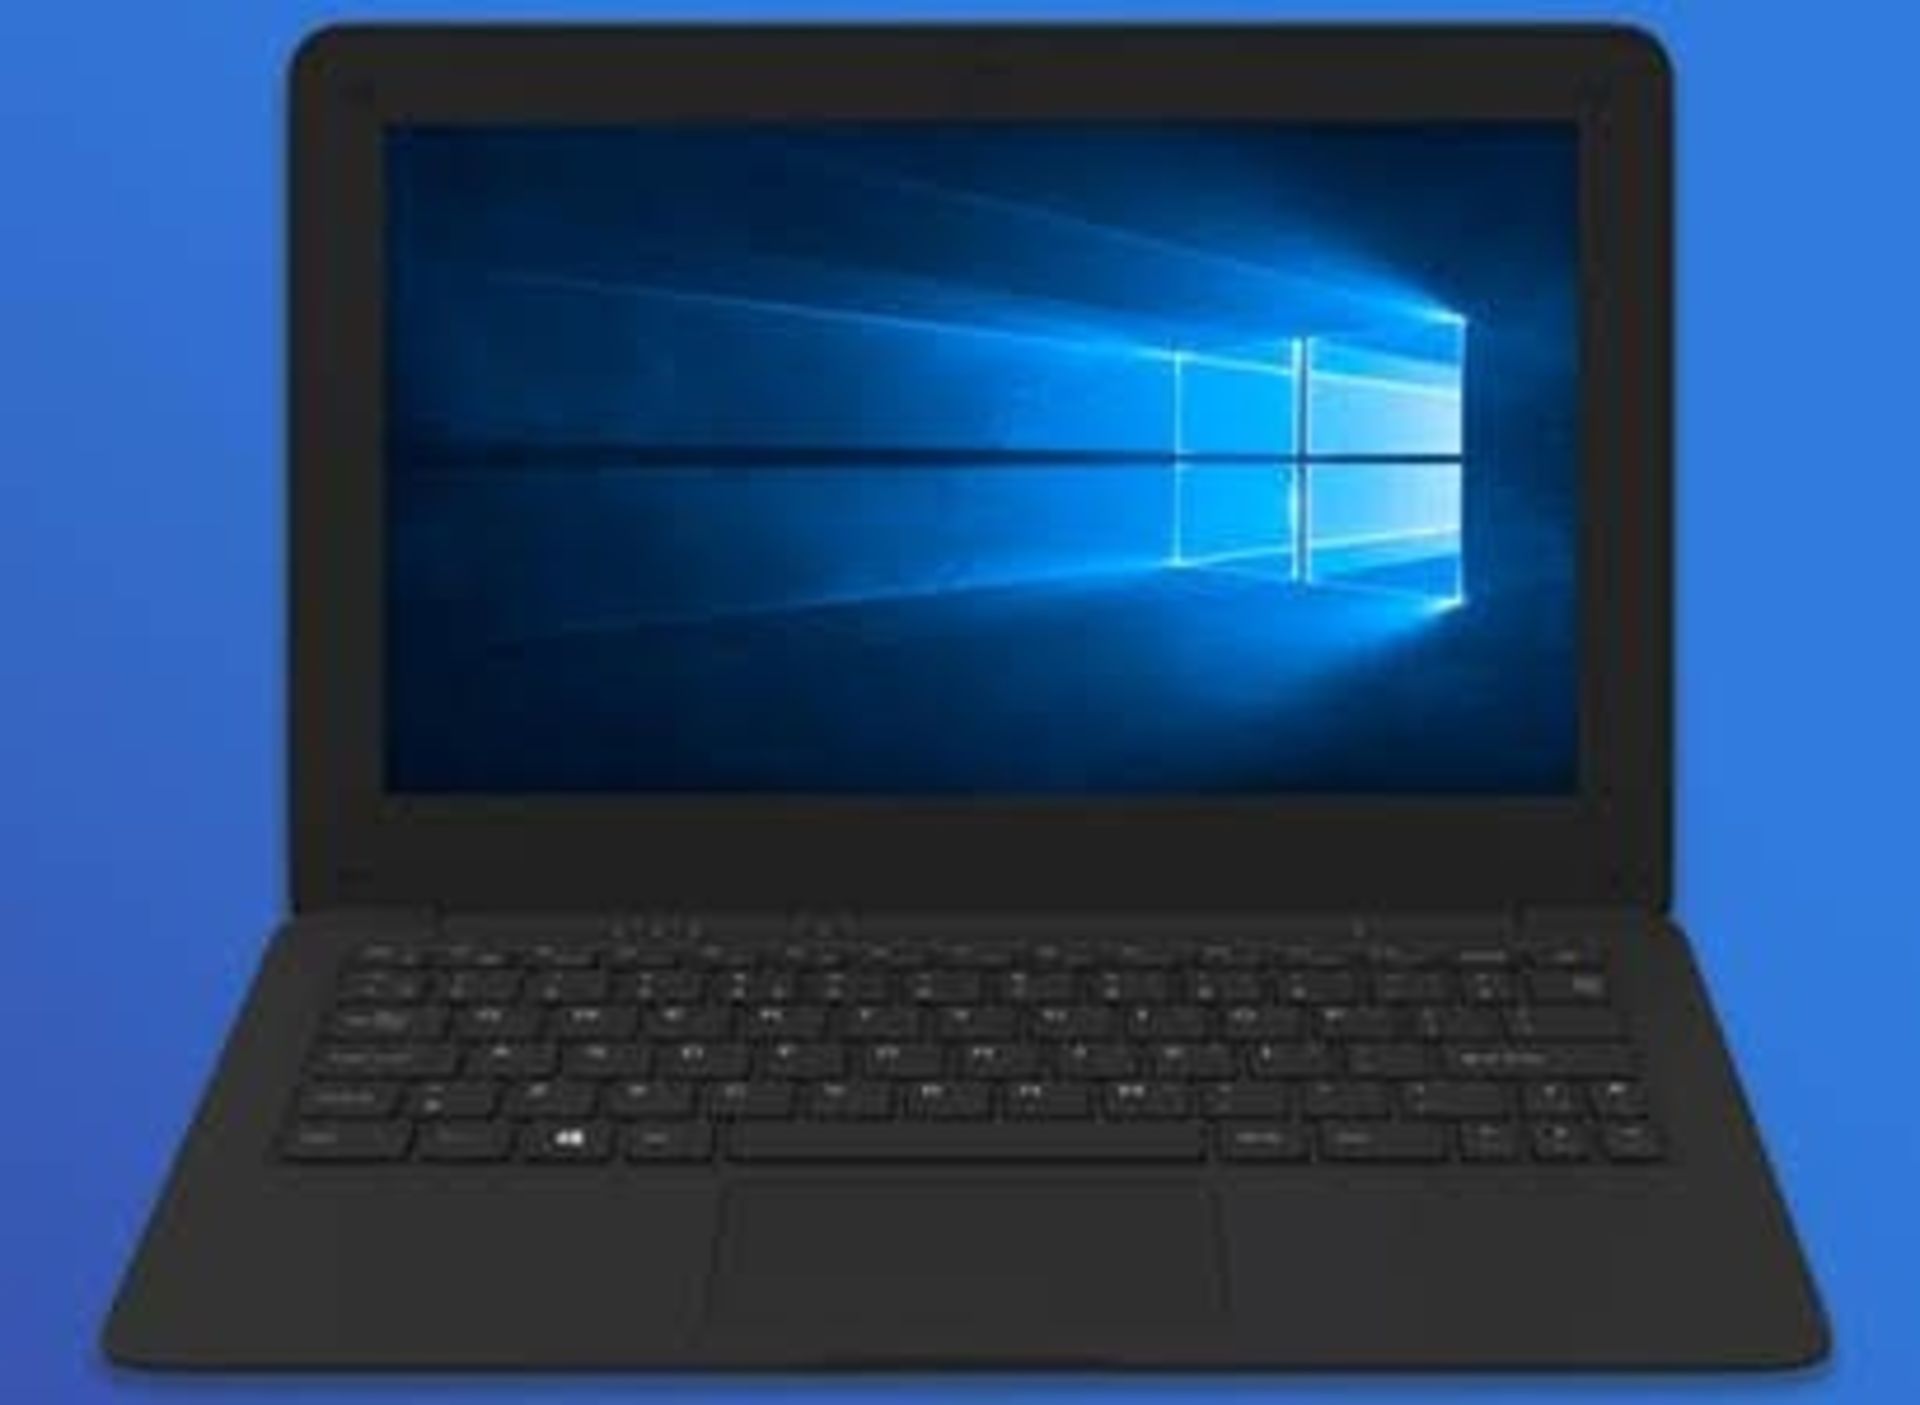 V Grade A/B 11.6 Inch Notebook Laptop - Windows 10 Home - 2GB RAM - 32GB EMMC - Precision Touch Pad